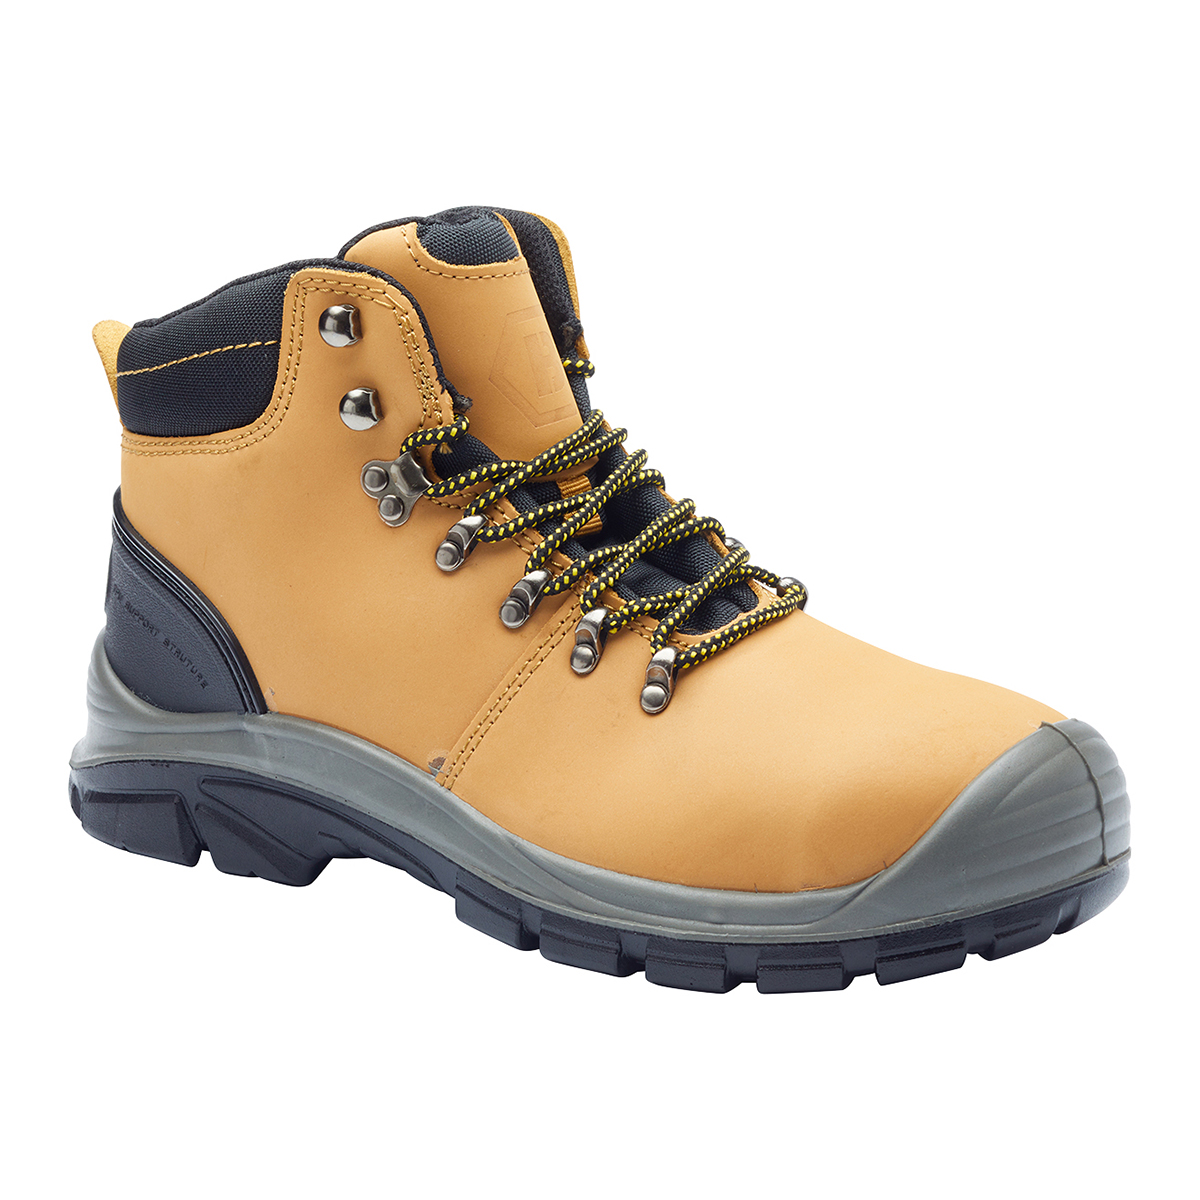 Sf79 malvern hiker boot - honey - size 08